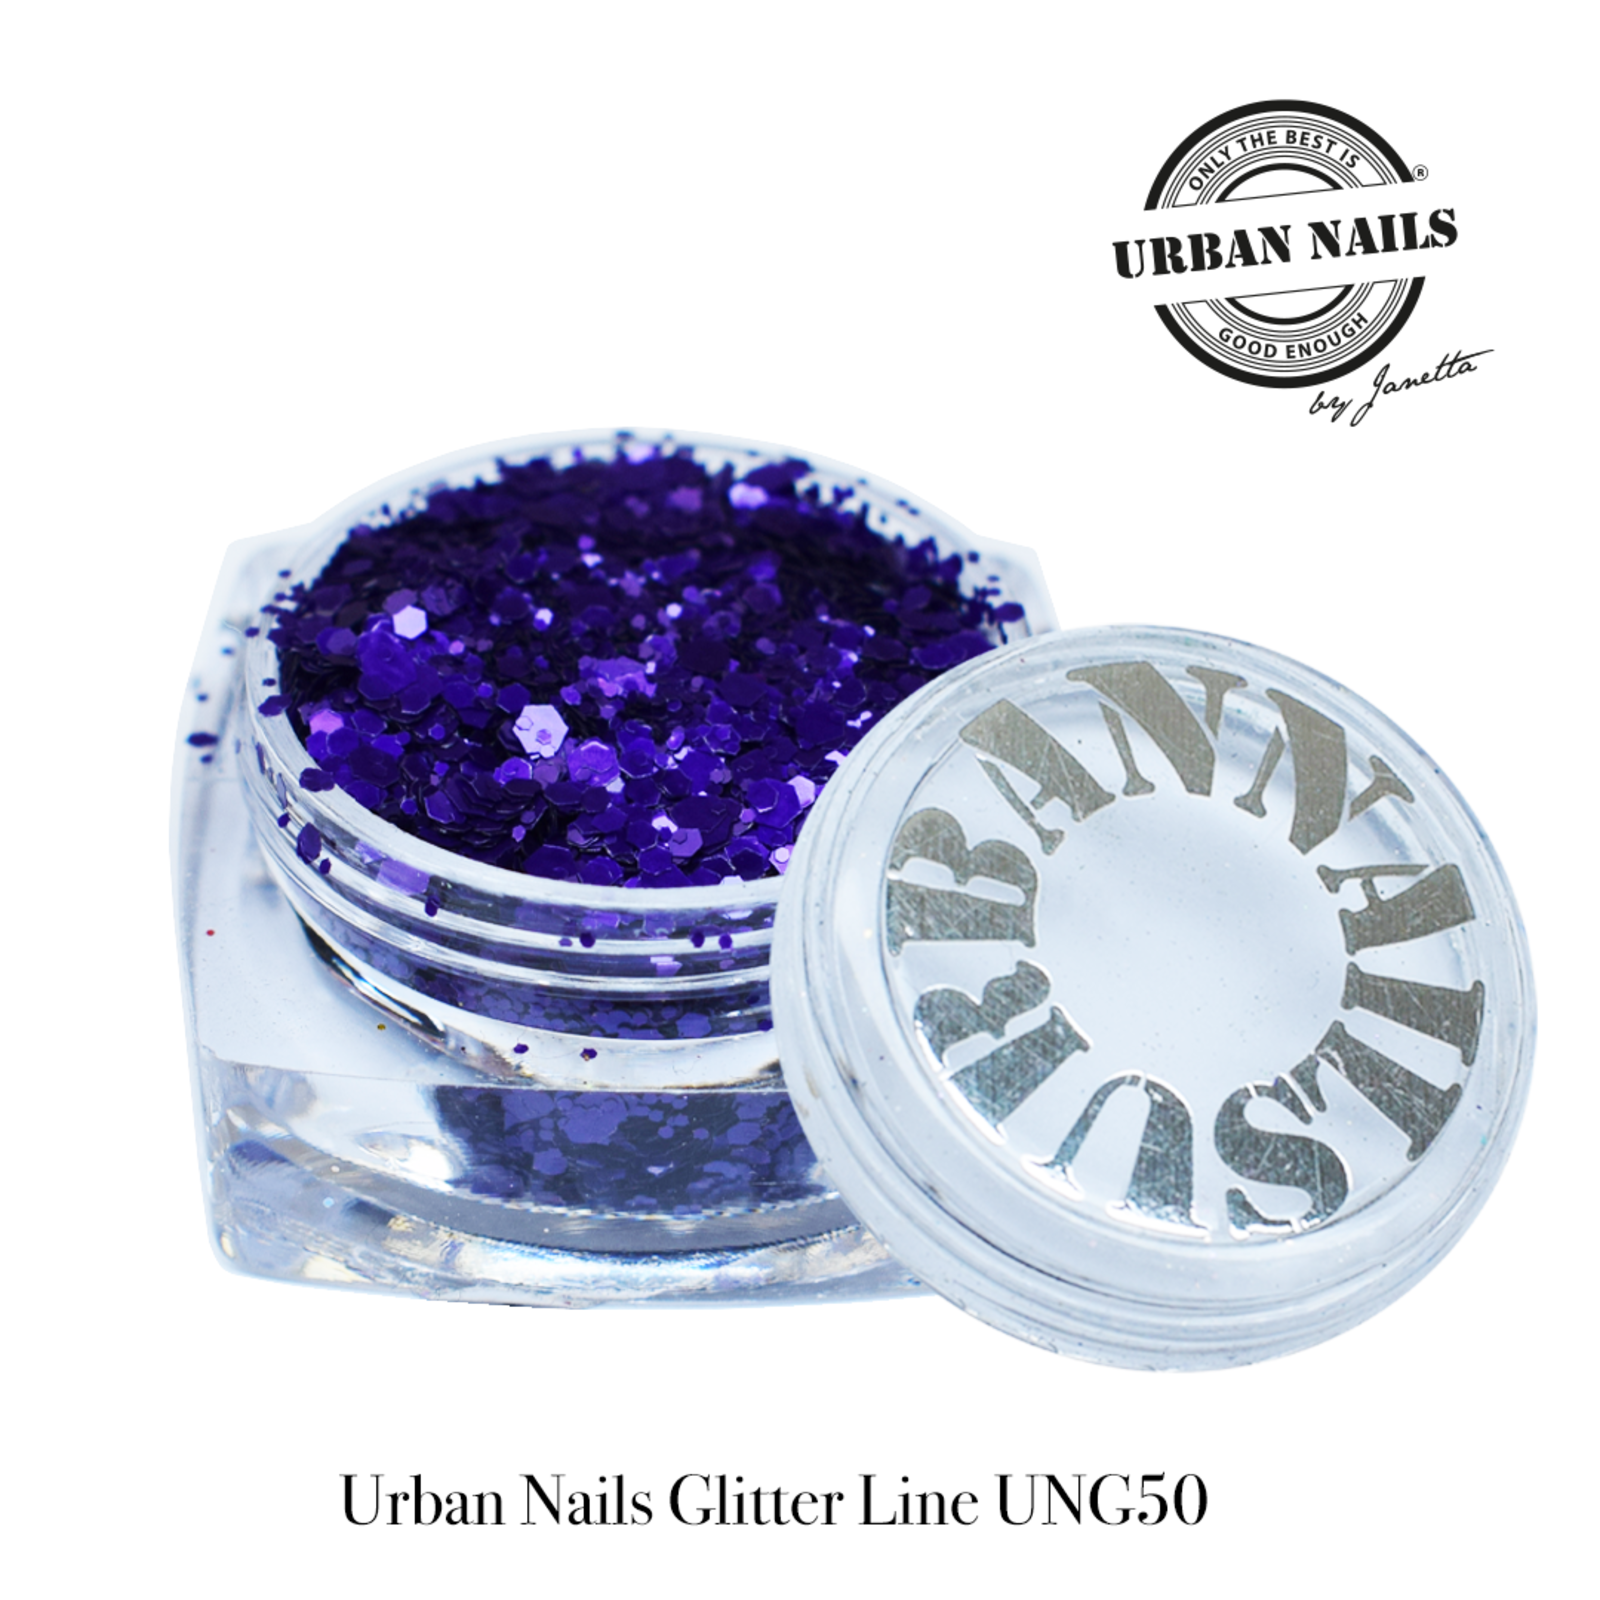 Urban nails Glitter Line UNG50